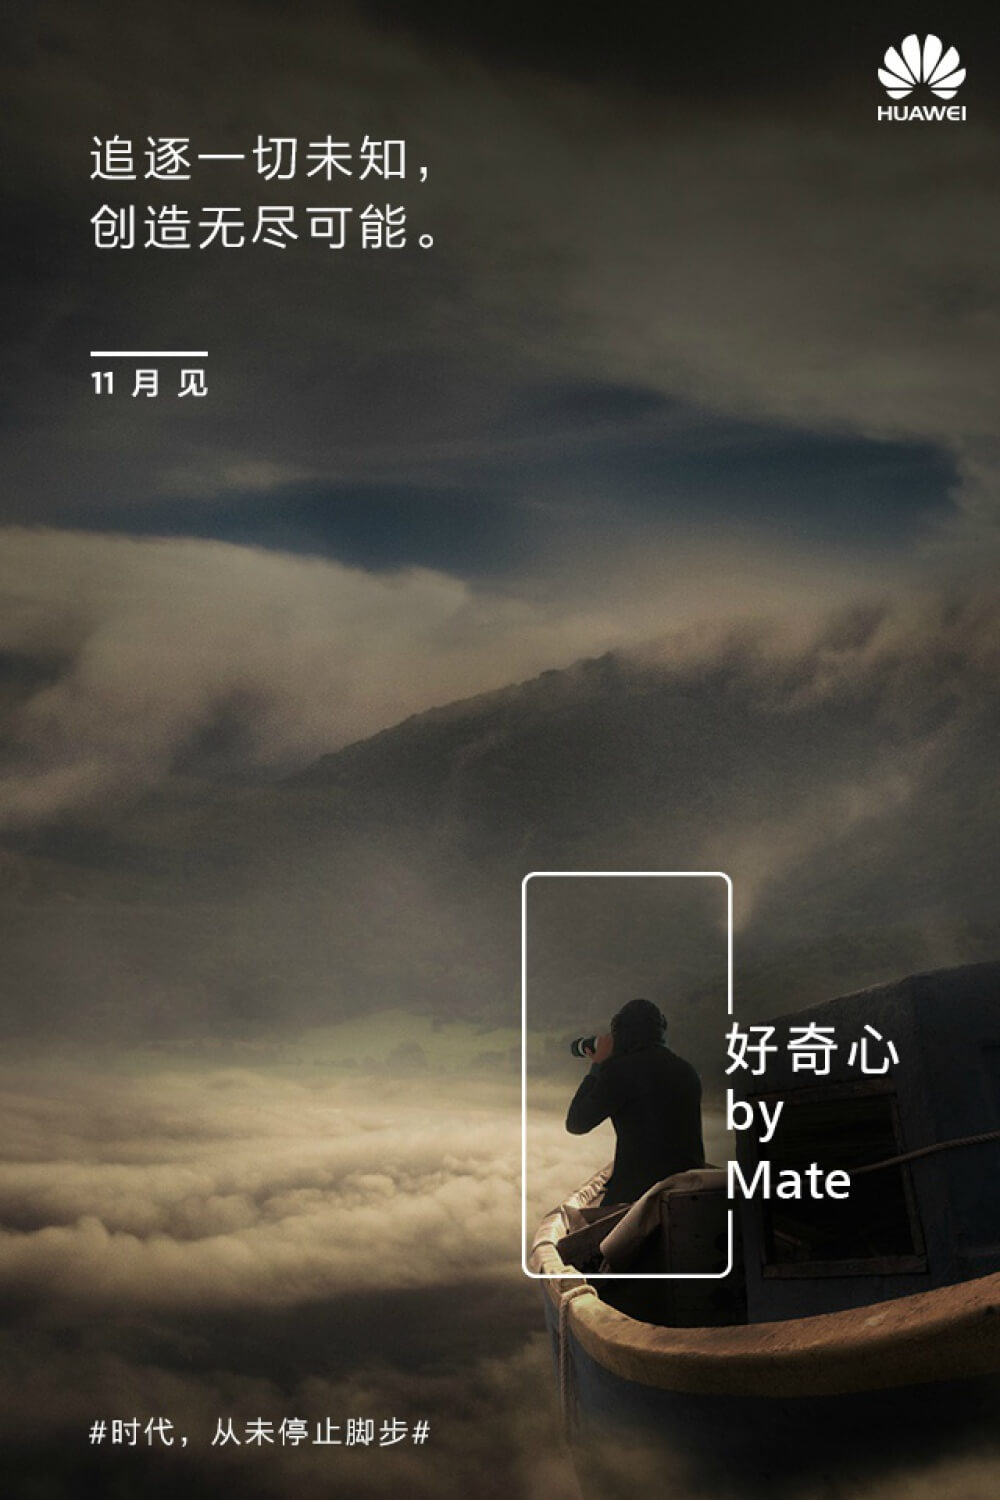 Второй тизер Huawei Mate 9